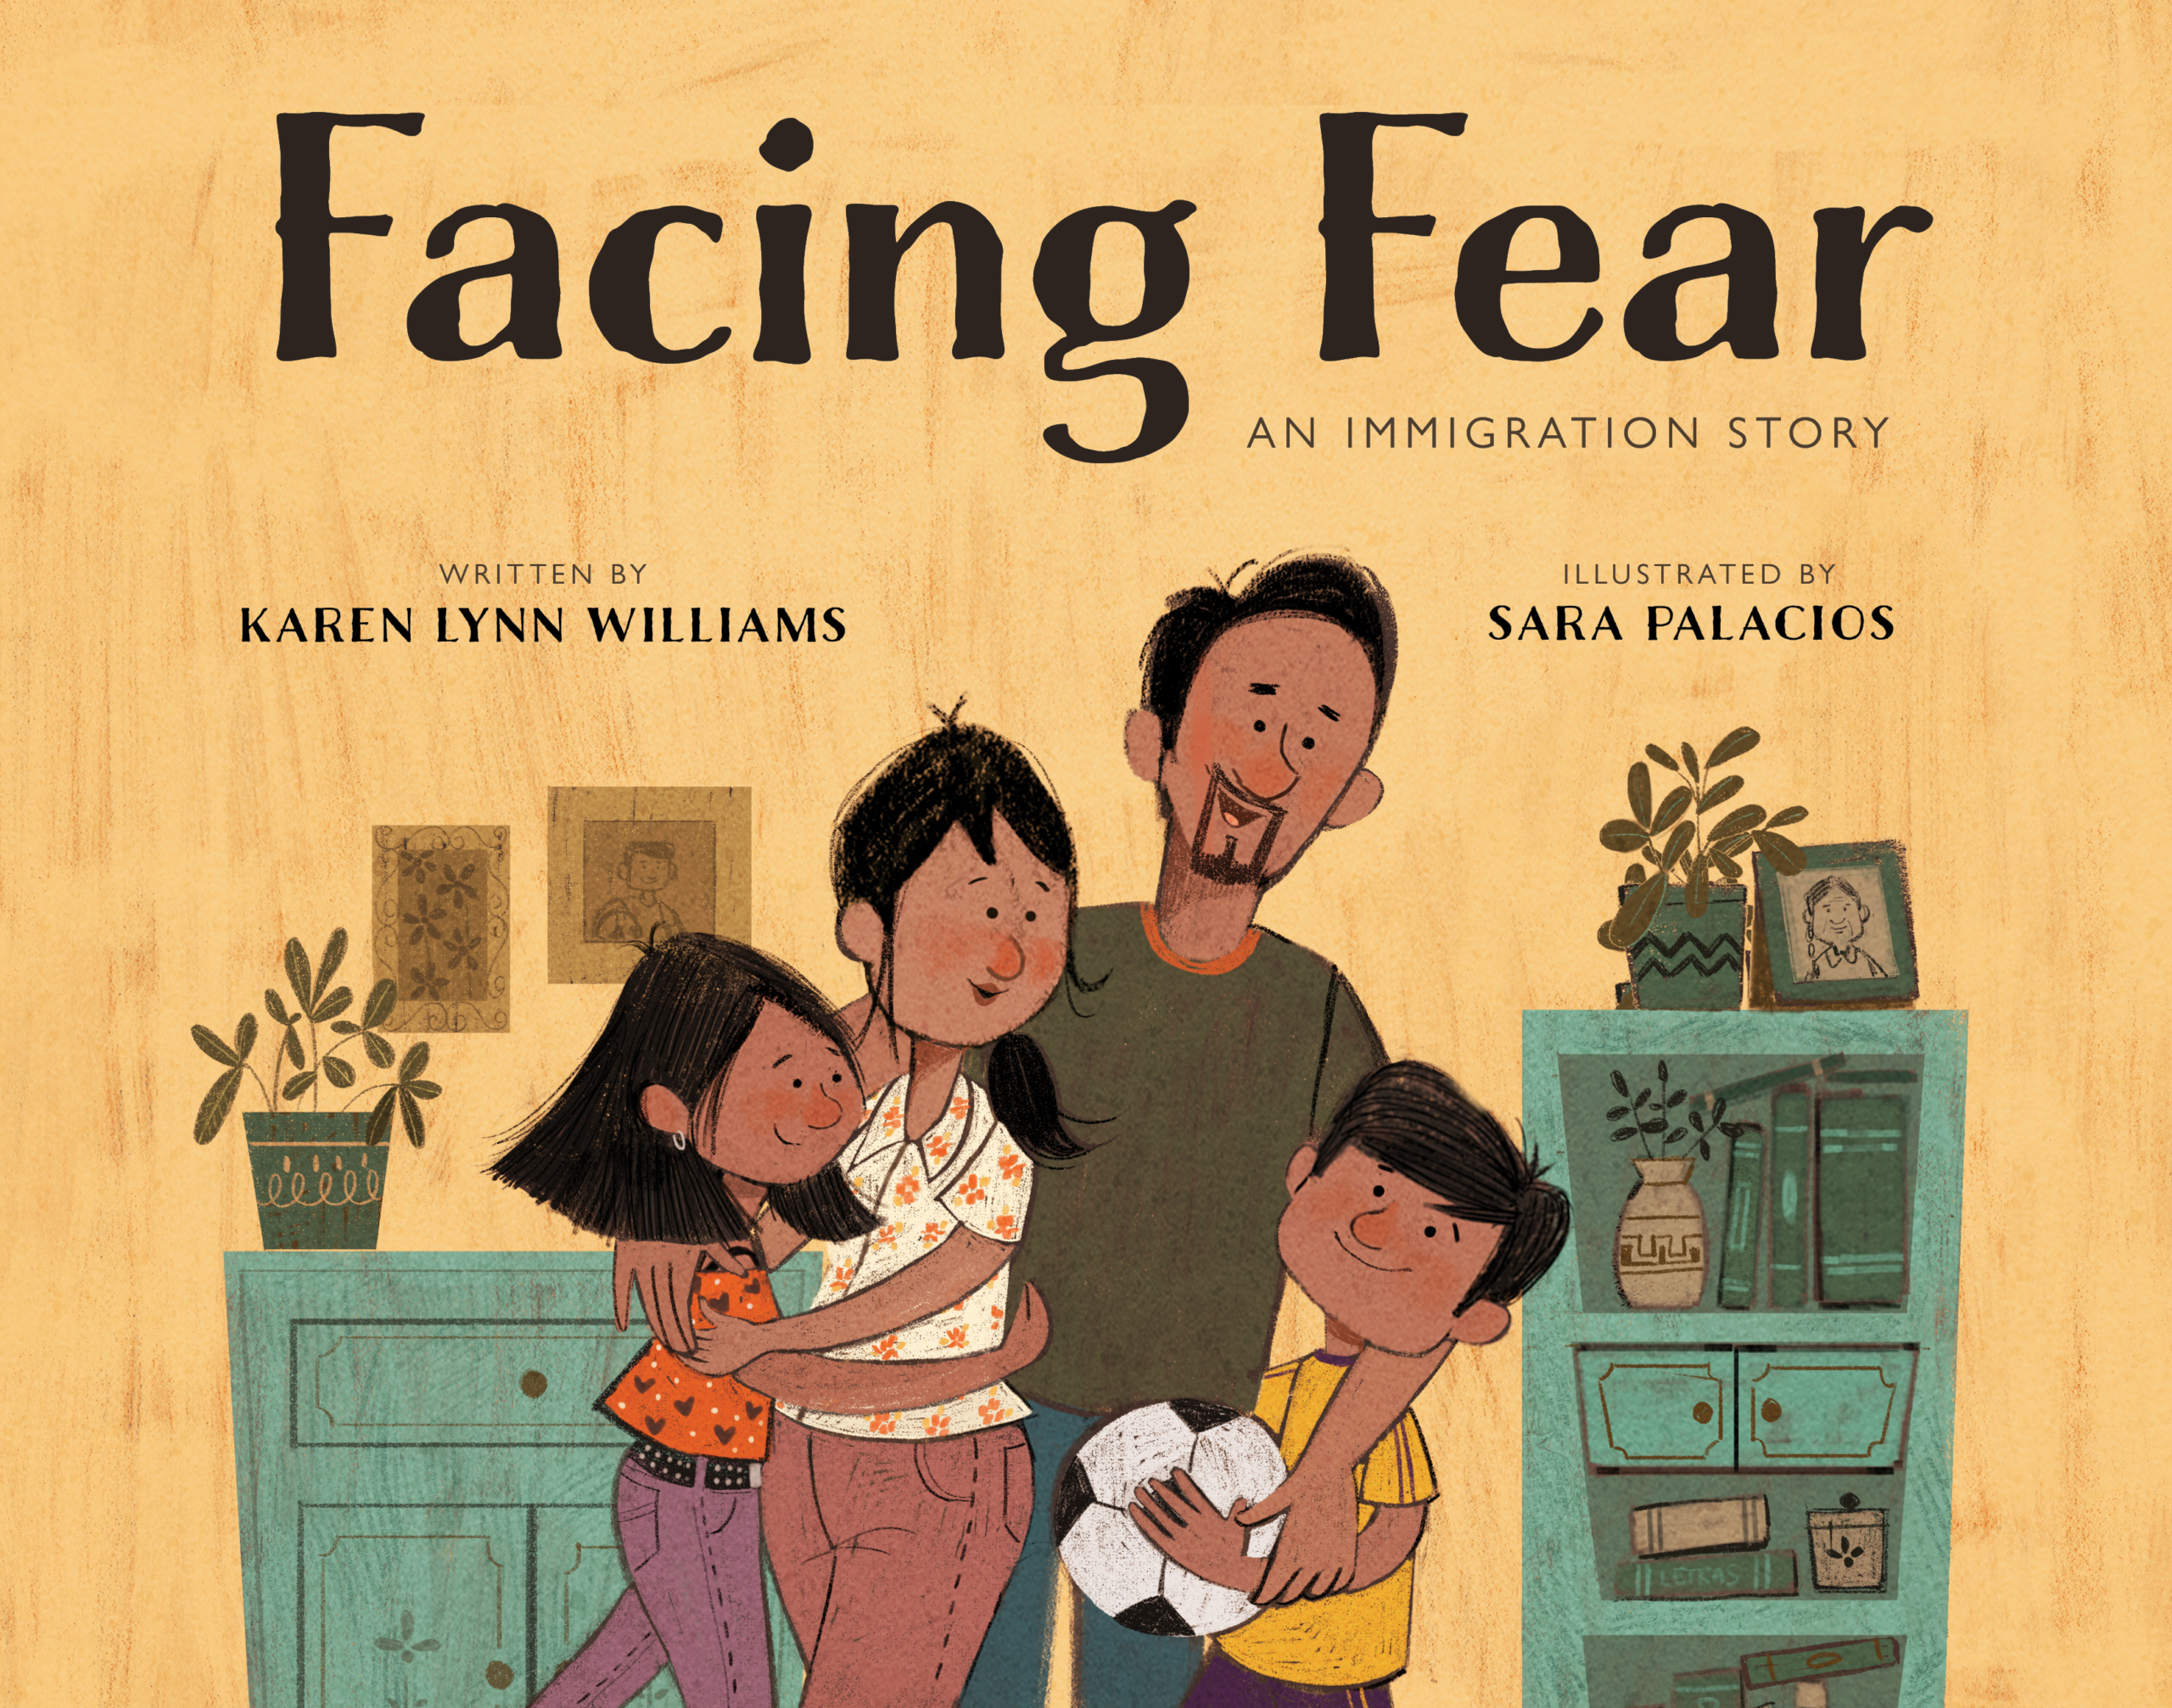 Facing Fear: An Immigration Story by Karen Lynn Williams